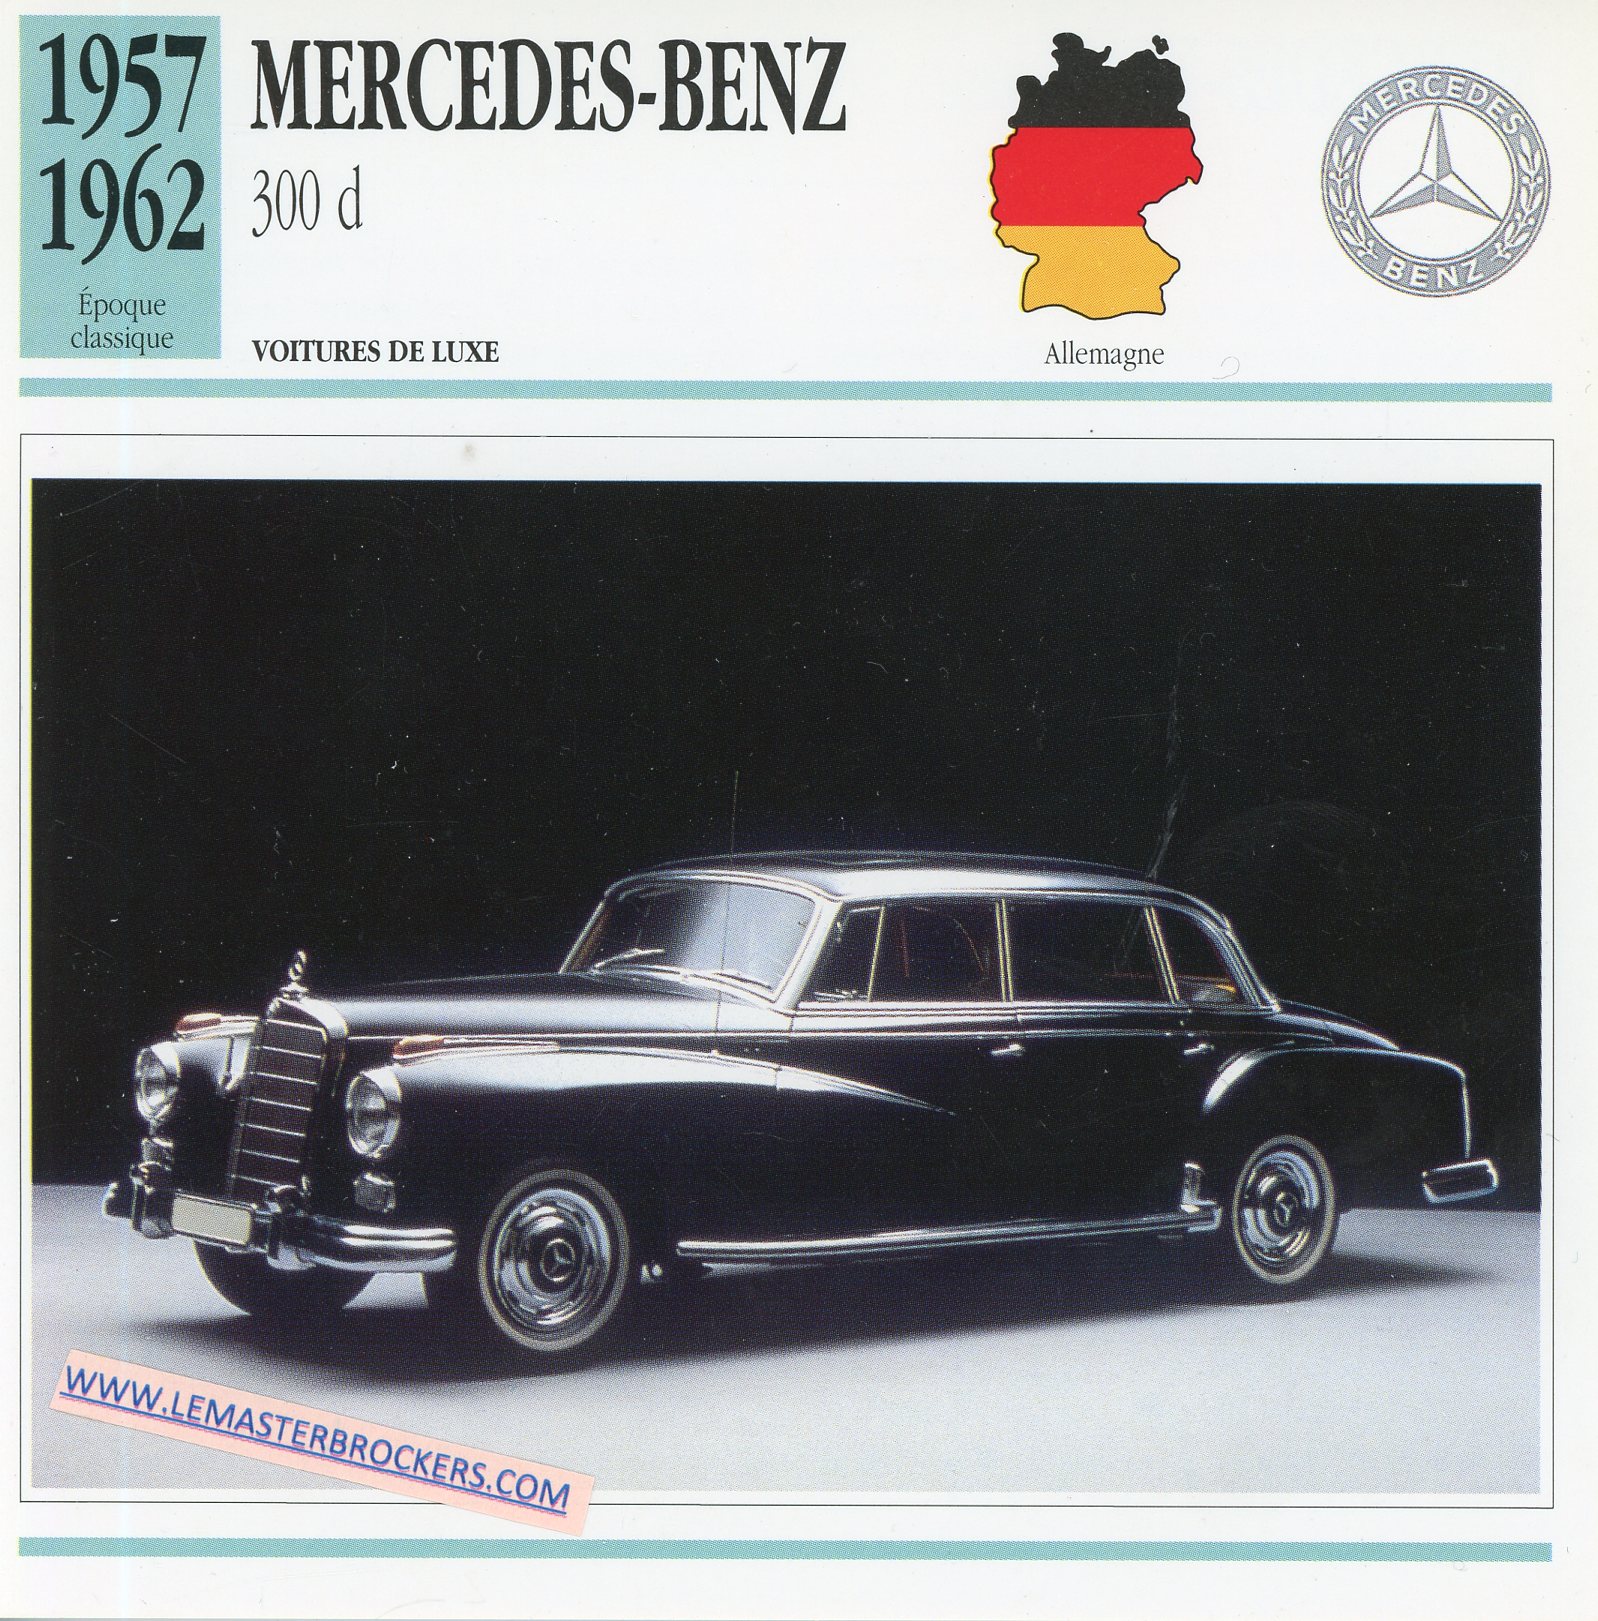 FICHE-AUTO-ATLAS-MERCEDES-BENZ-300D-1957-1962-LEMASTERBROCKERS-CARD-CARS